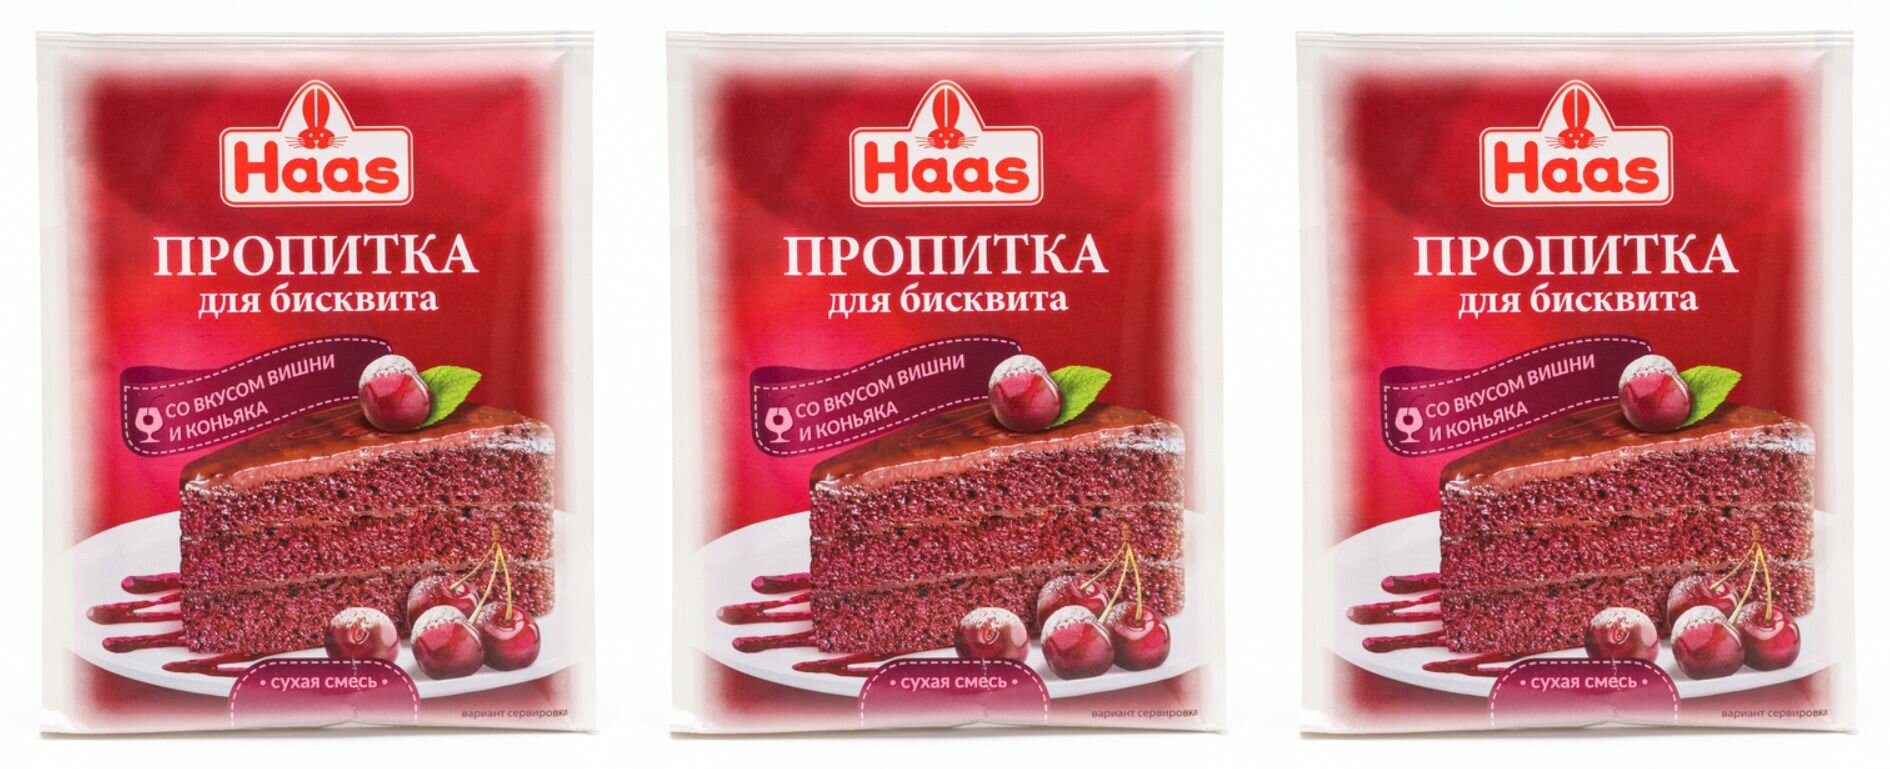 Haas Пропитка для бисквита со вкусом вишни и коньяка, 80 г, 3 уп